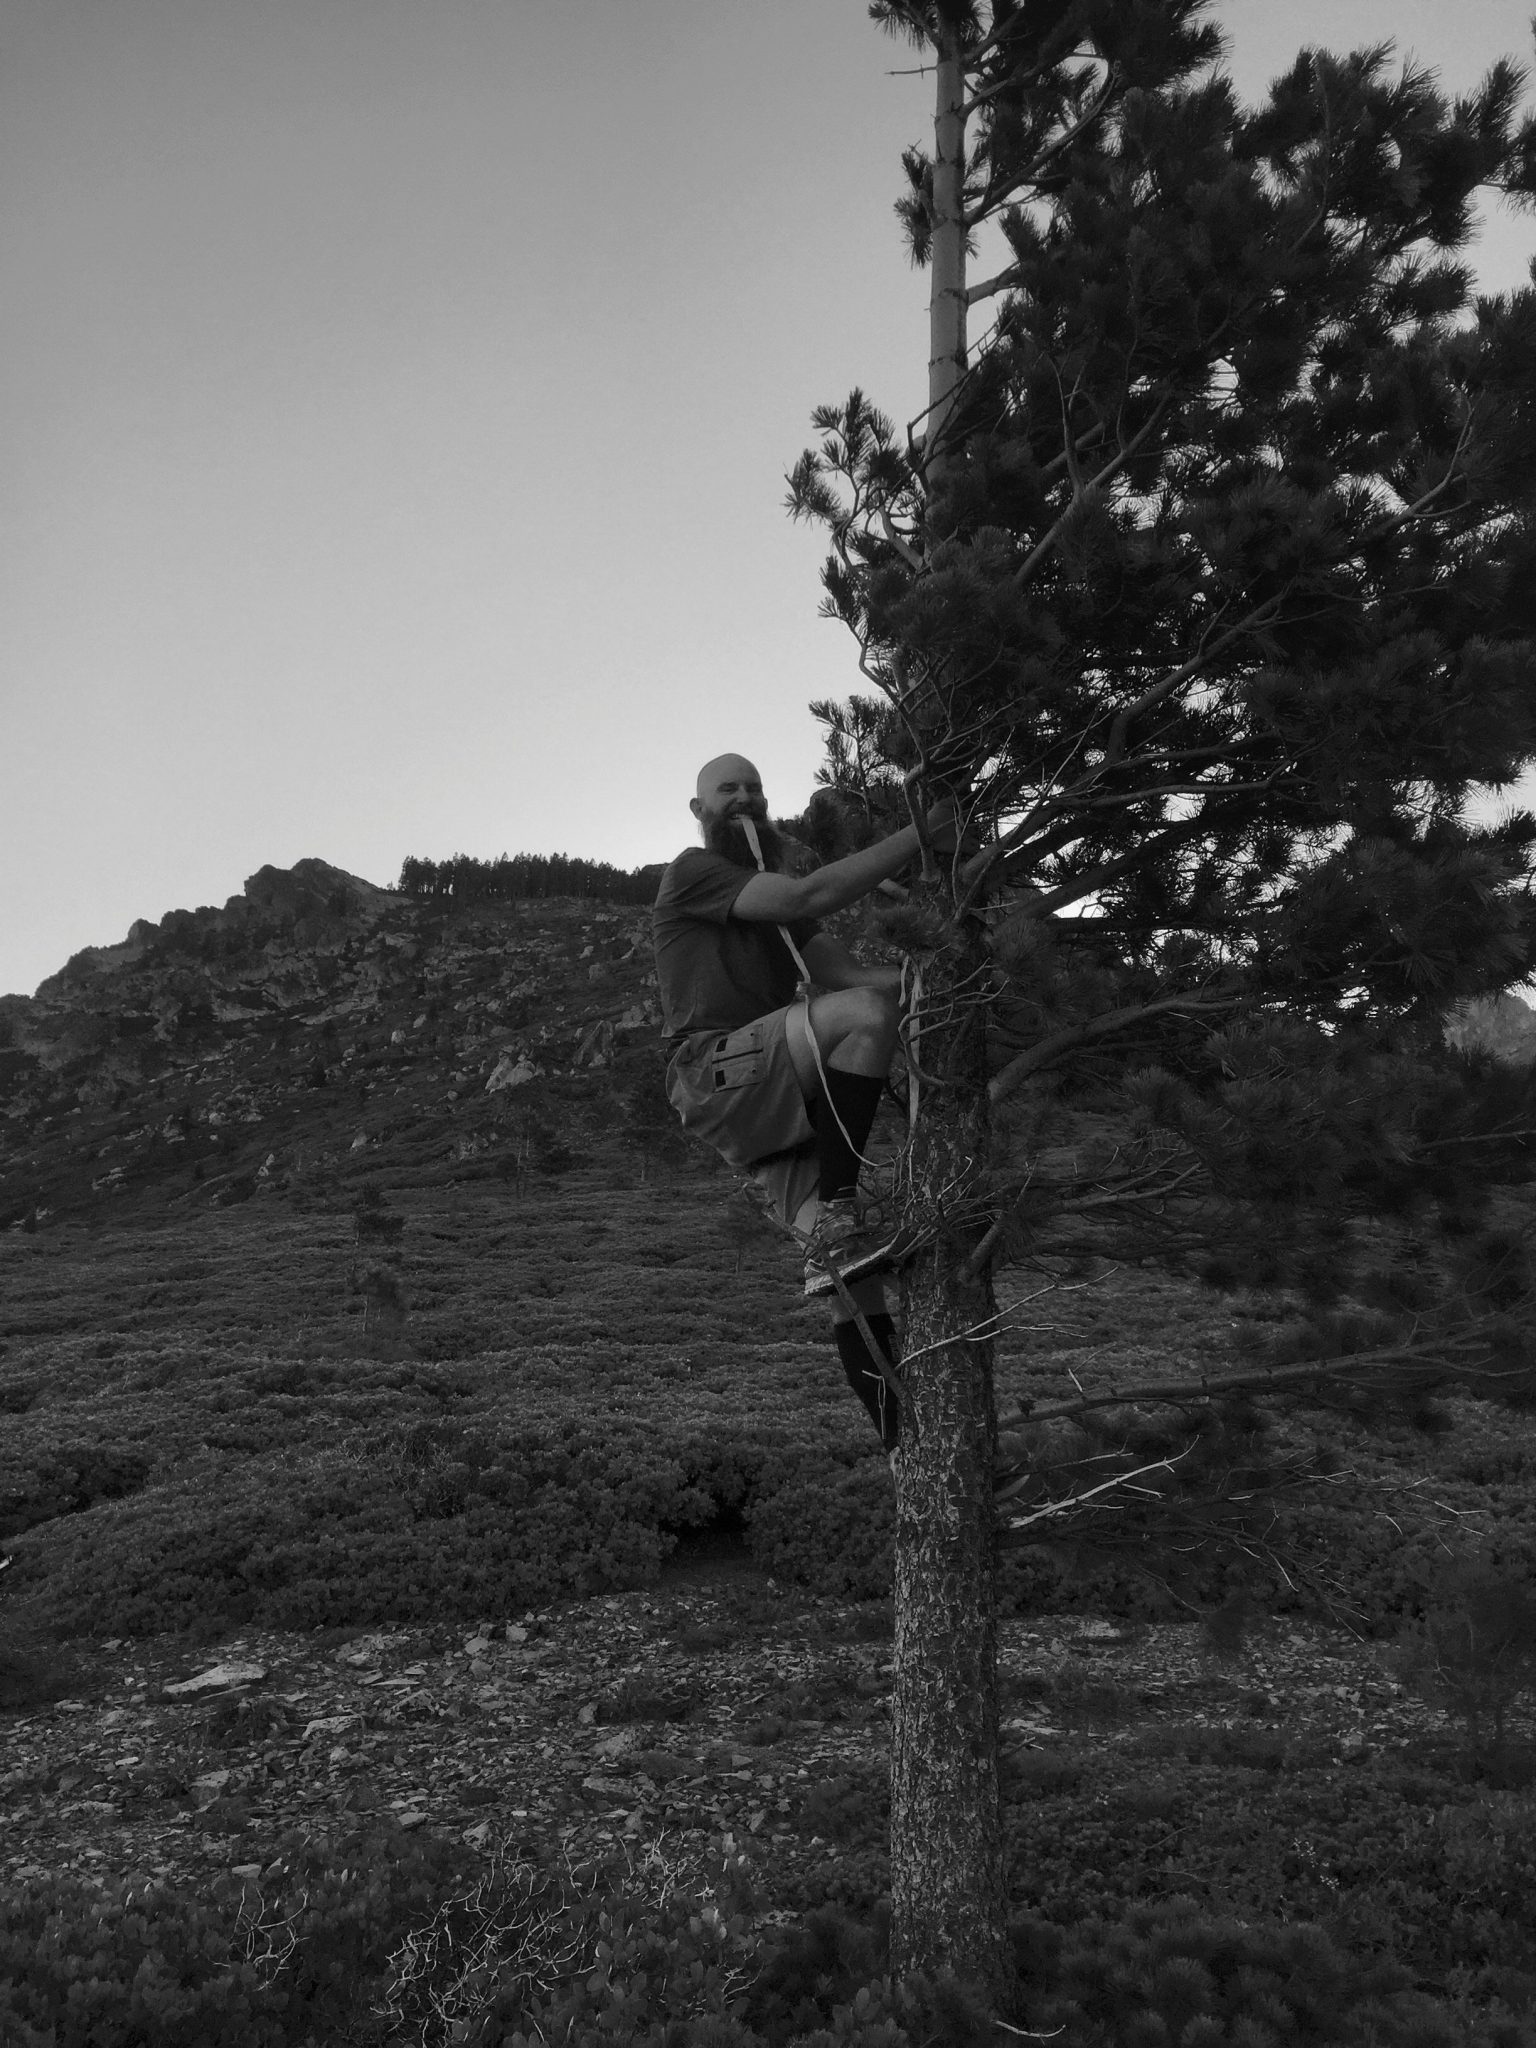 Beardoh scaling a tree